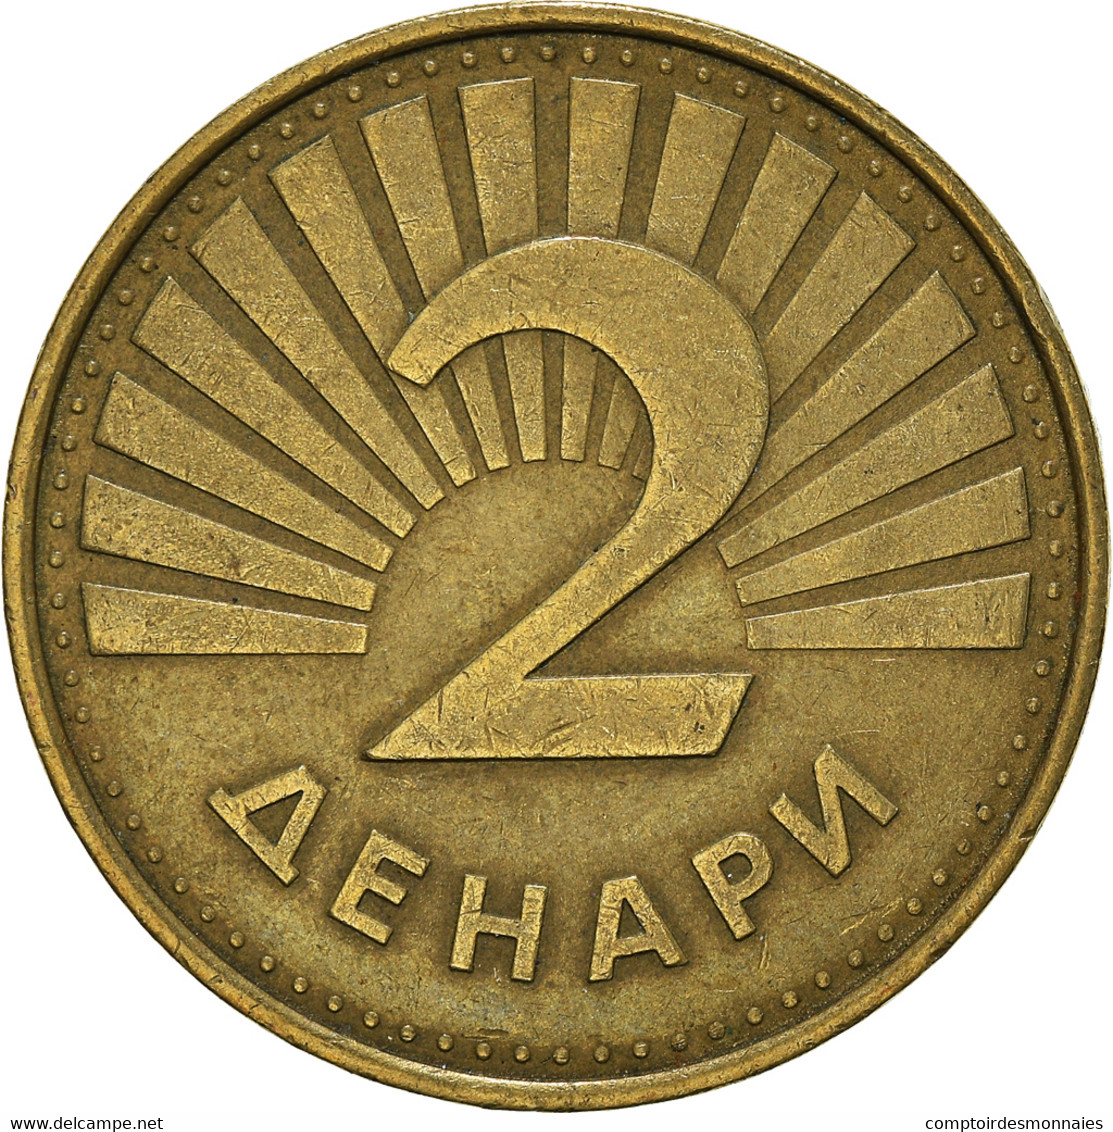 Monnaie, Macédoine, 2 Denari, 2001 - North Macedonia